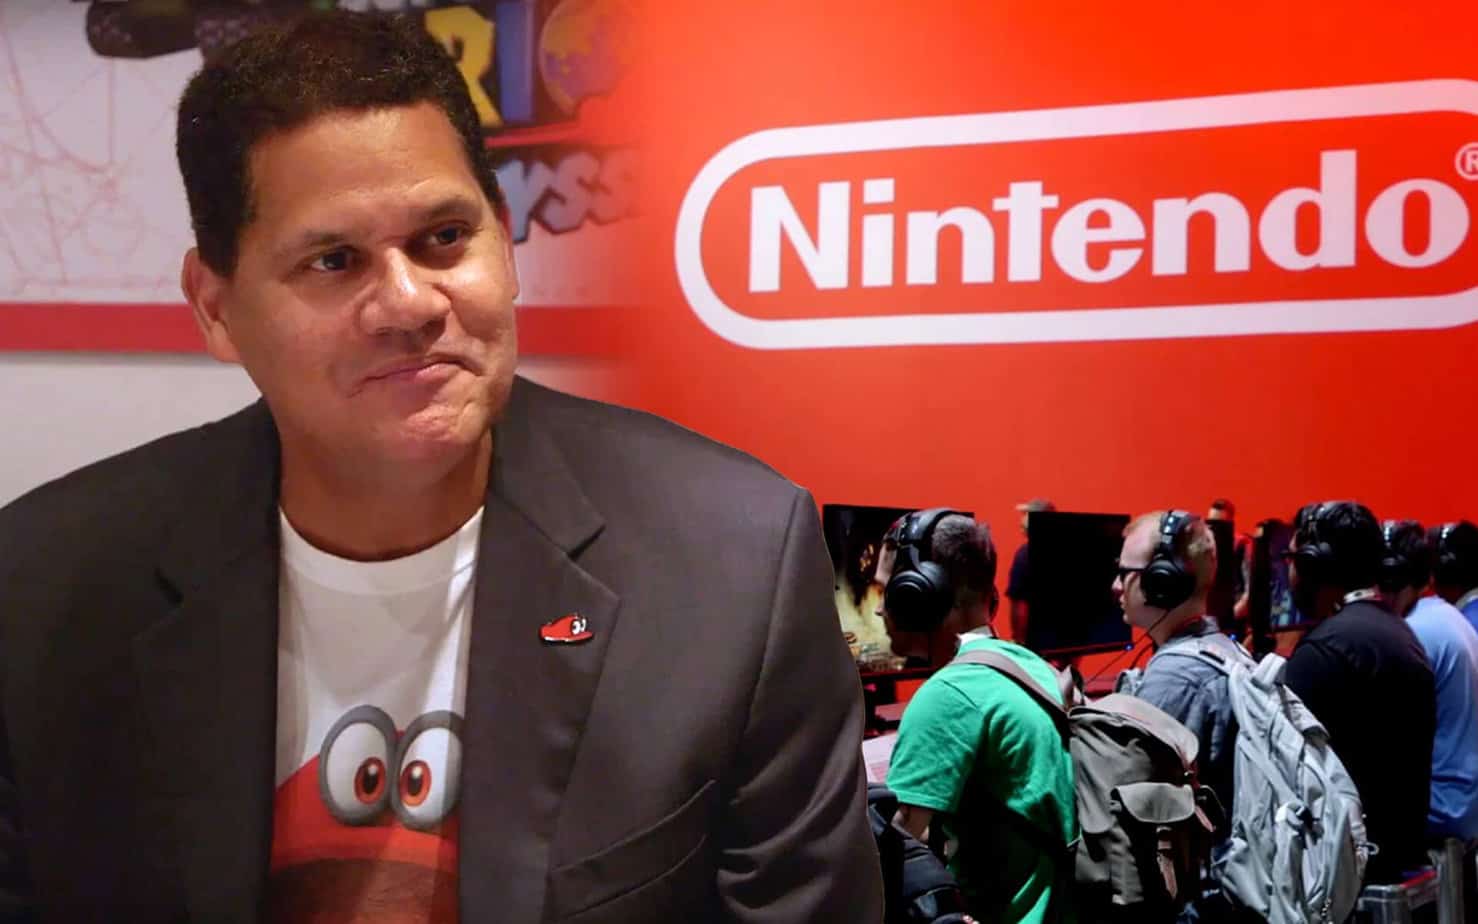 THE REGGINATOR IS BACK - Reggie Fils-Aime has joined Gamestop